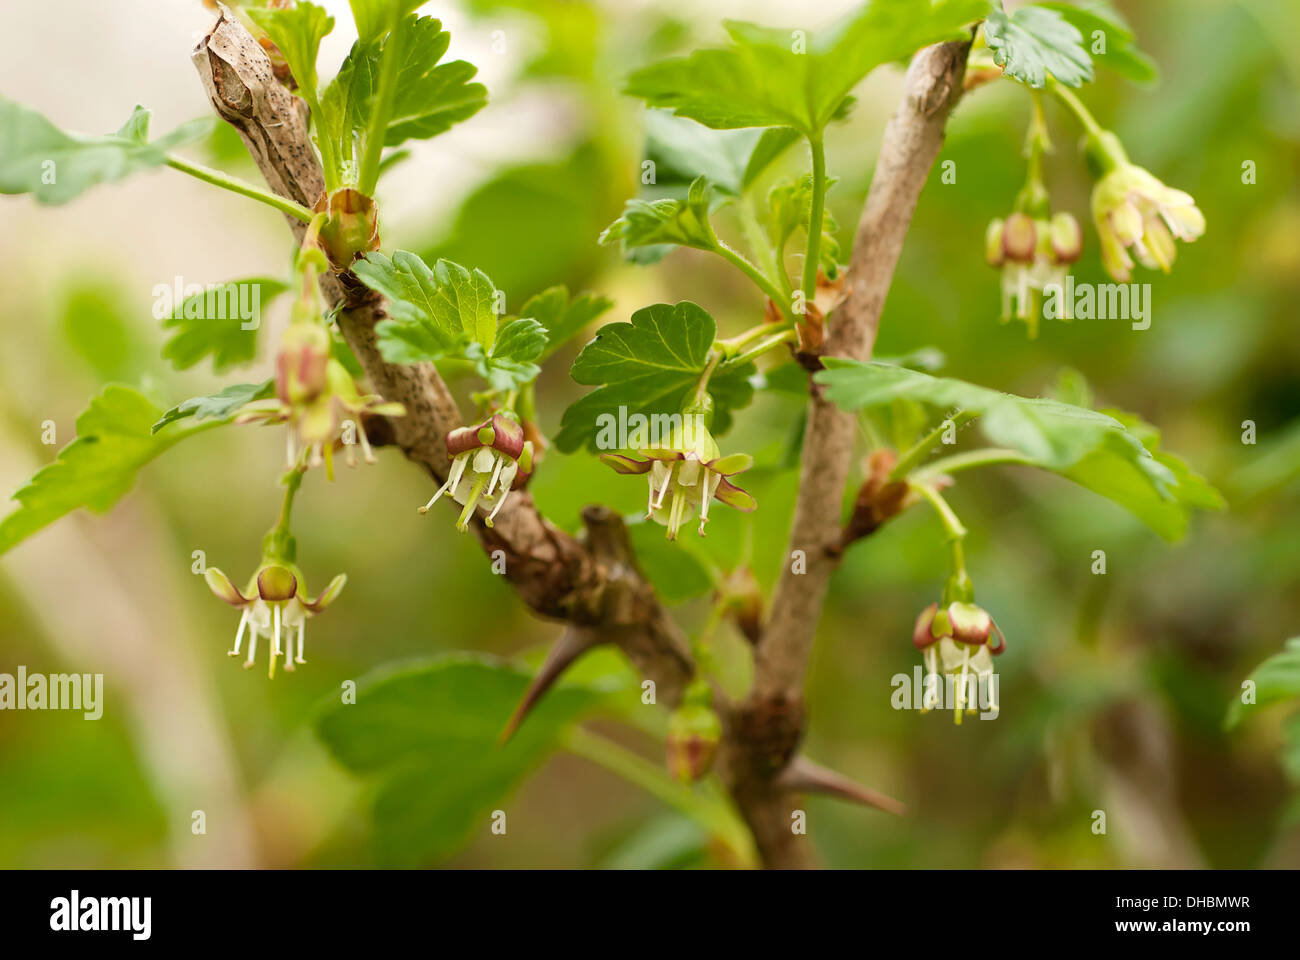 Gooseberry, Ribes uva-crispa 'Black velvet', growing outdoor on the plant. Stock Photo